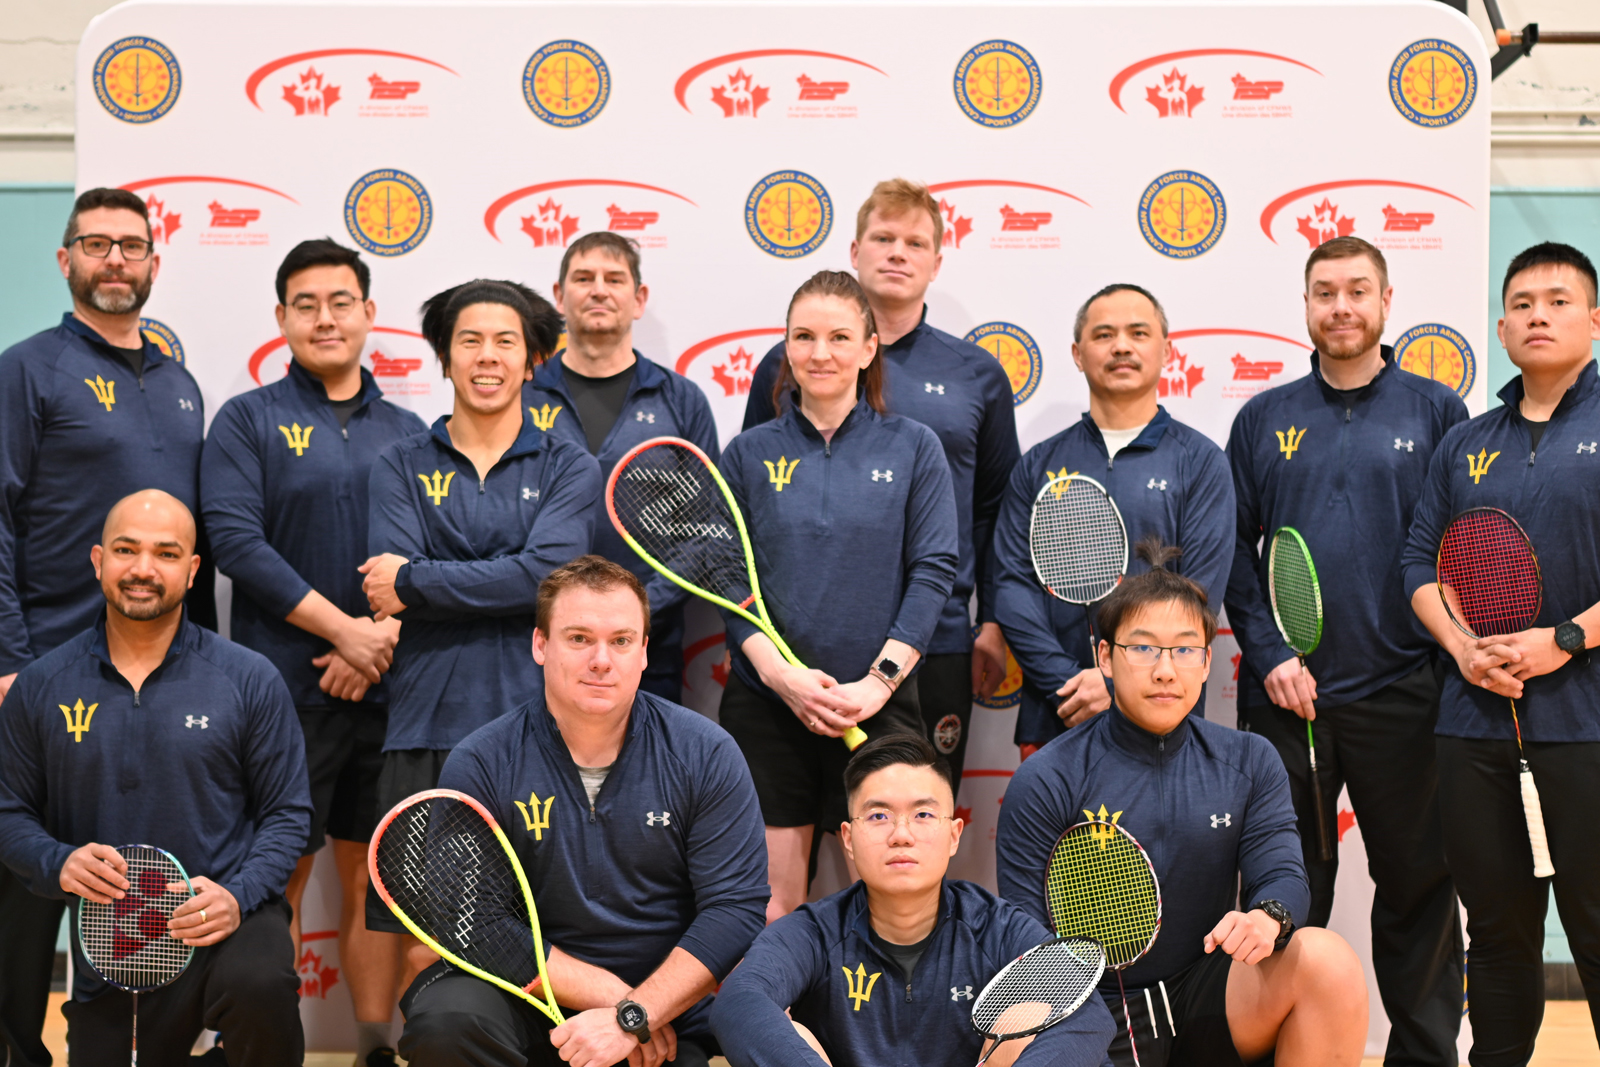 CFB Esquimalt Tritons squash and badminton team members pose together. Way to go!